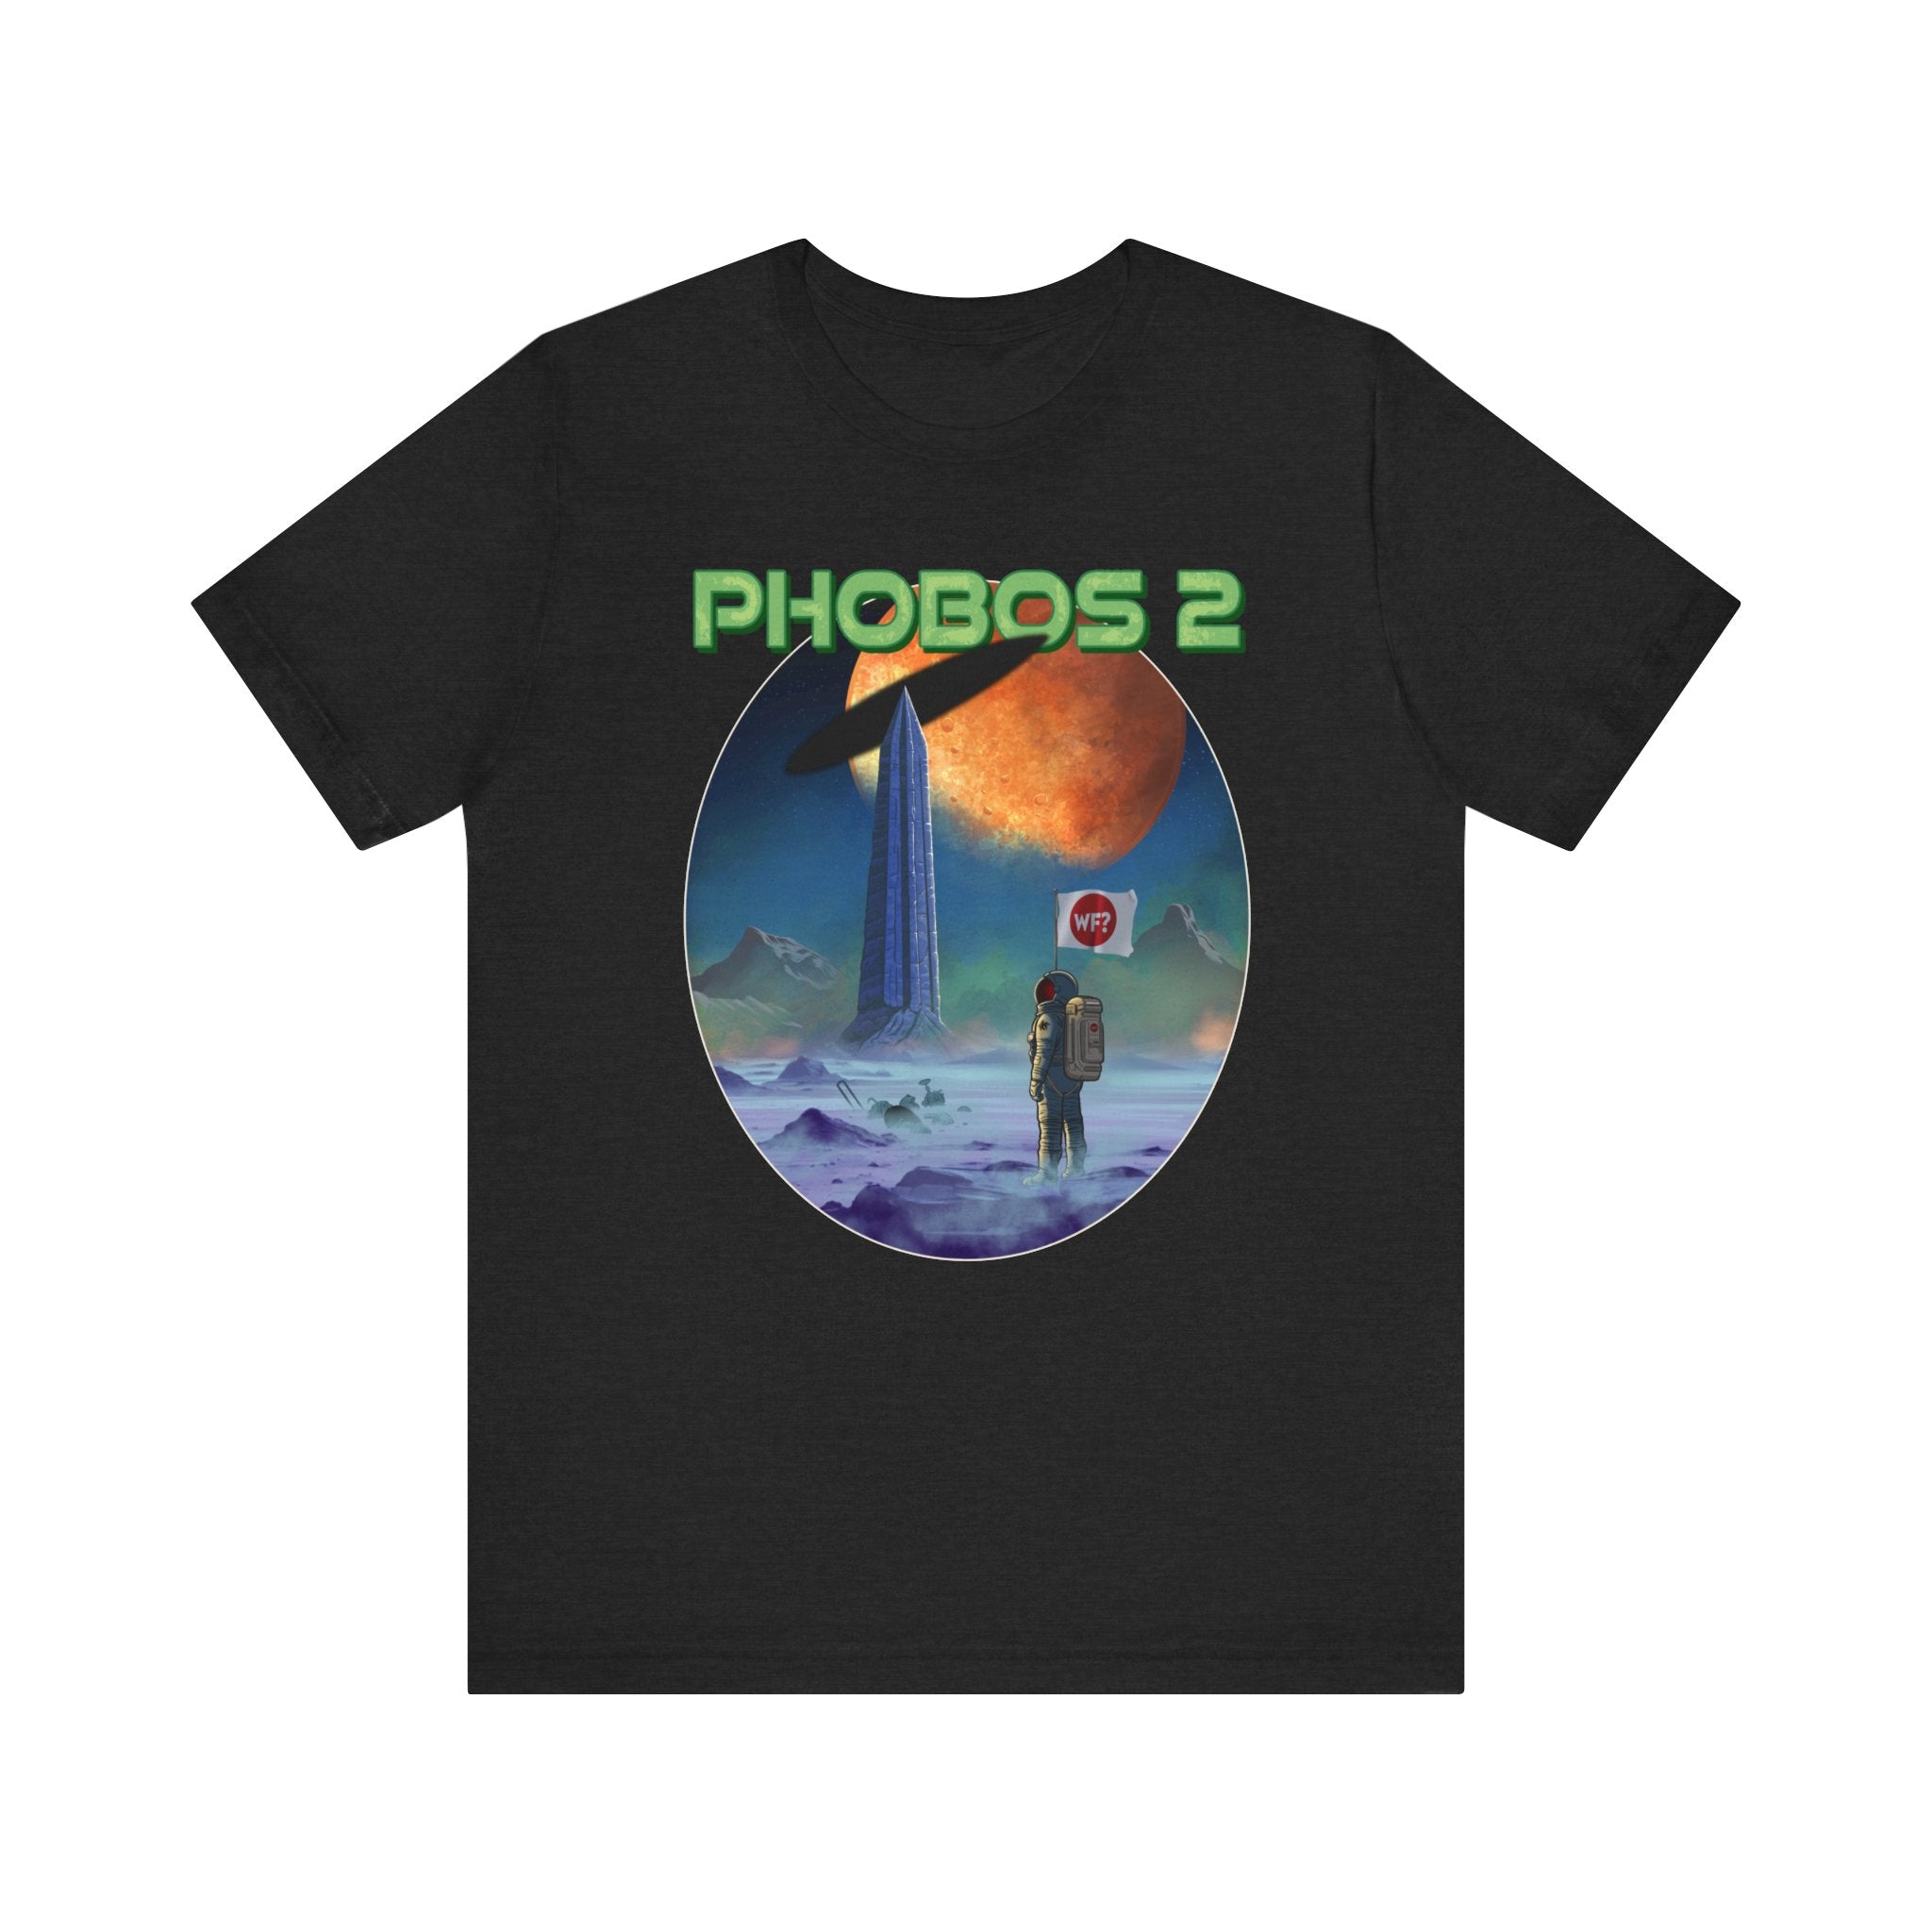 Buy solid-black-blend 4/11 Phobos 2 Limited Tee